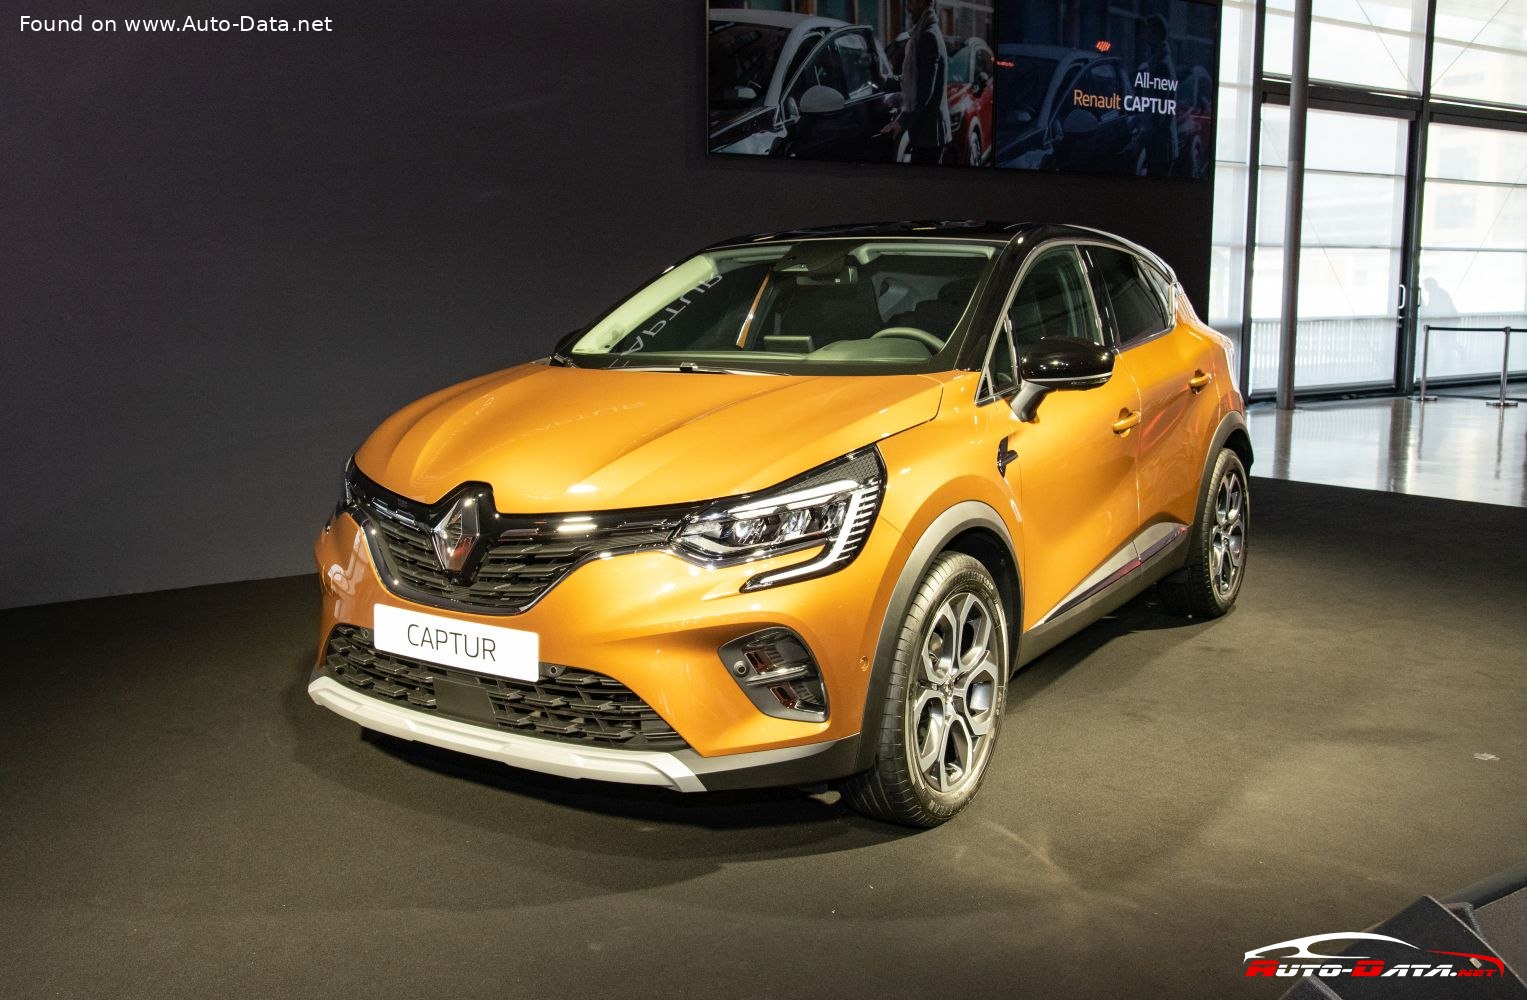 Captur Zubehörkatalog(3,0 MB) - Renault Preislisten